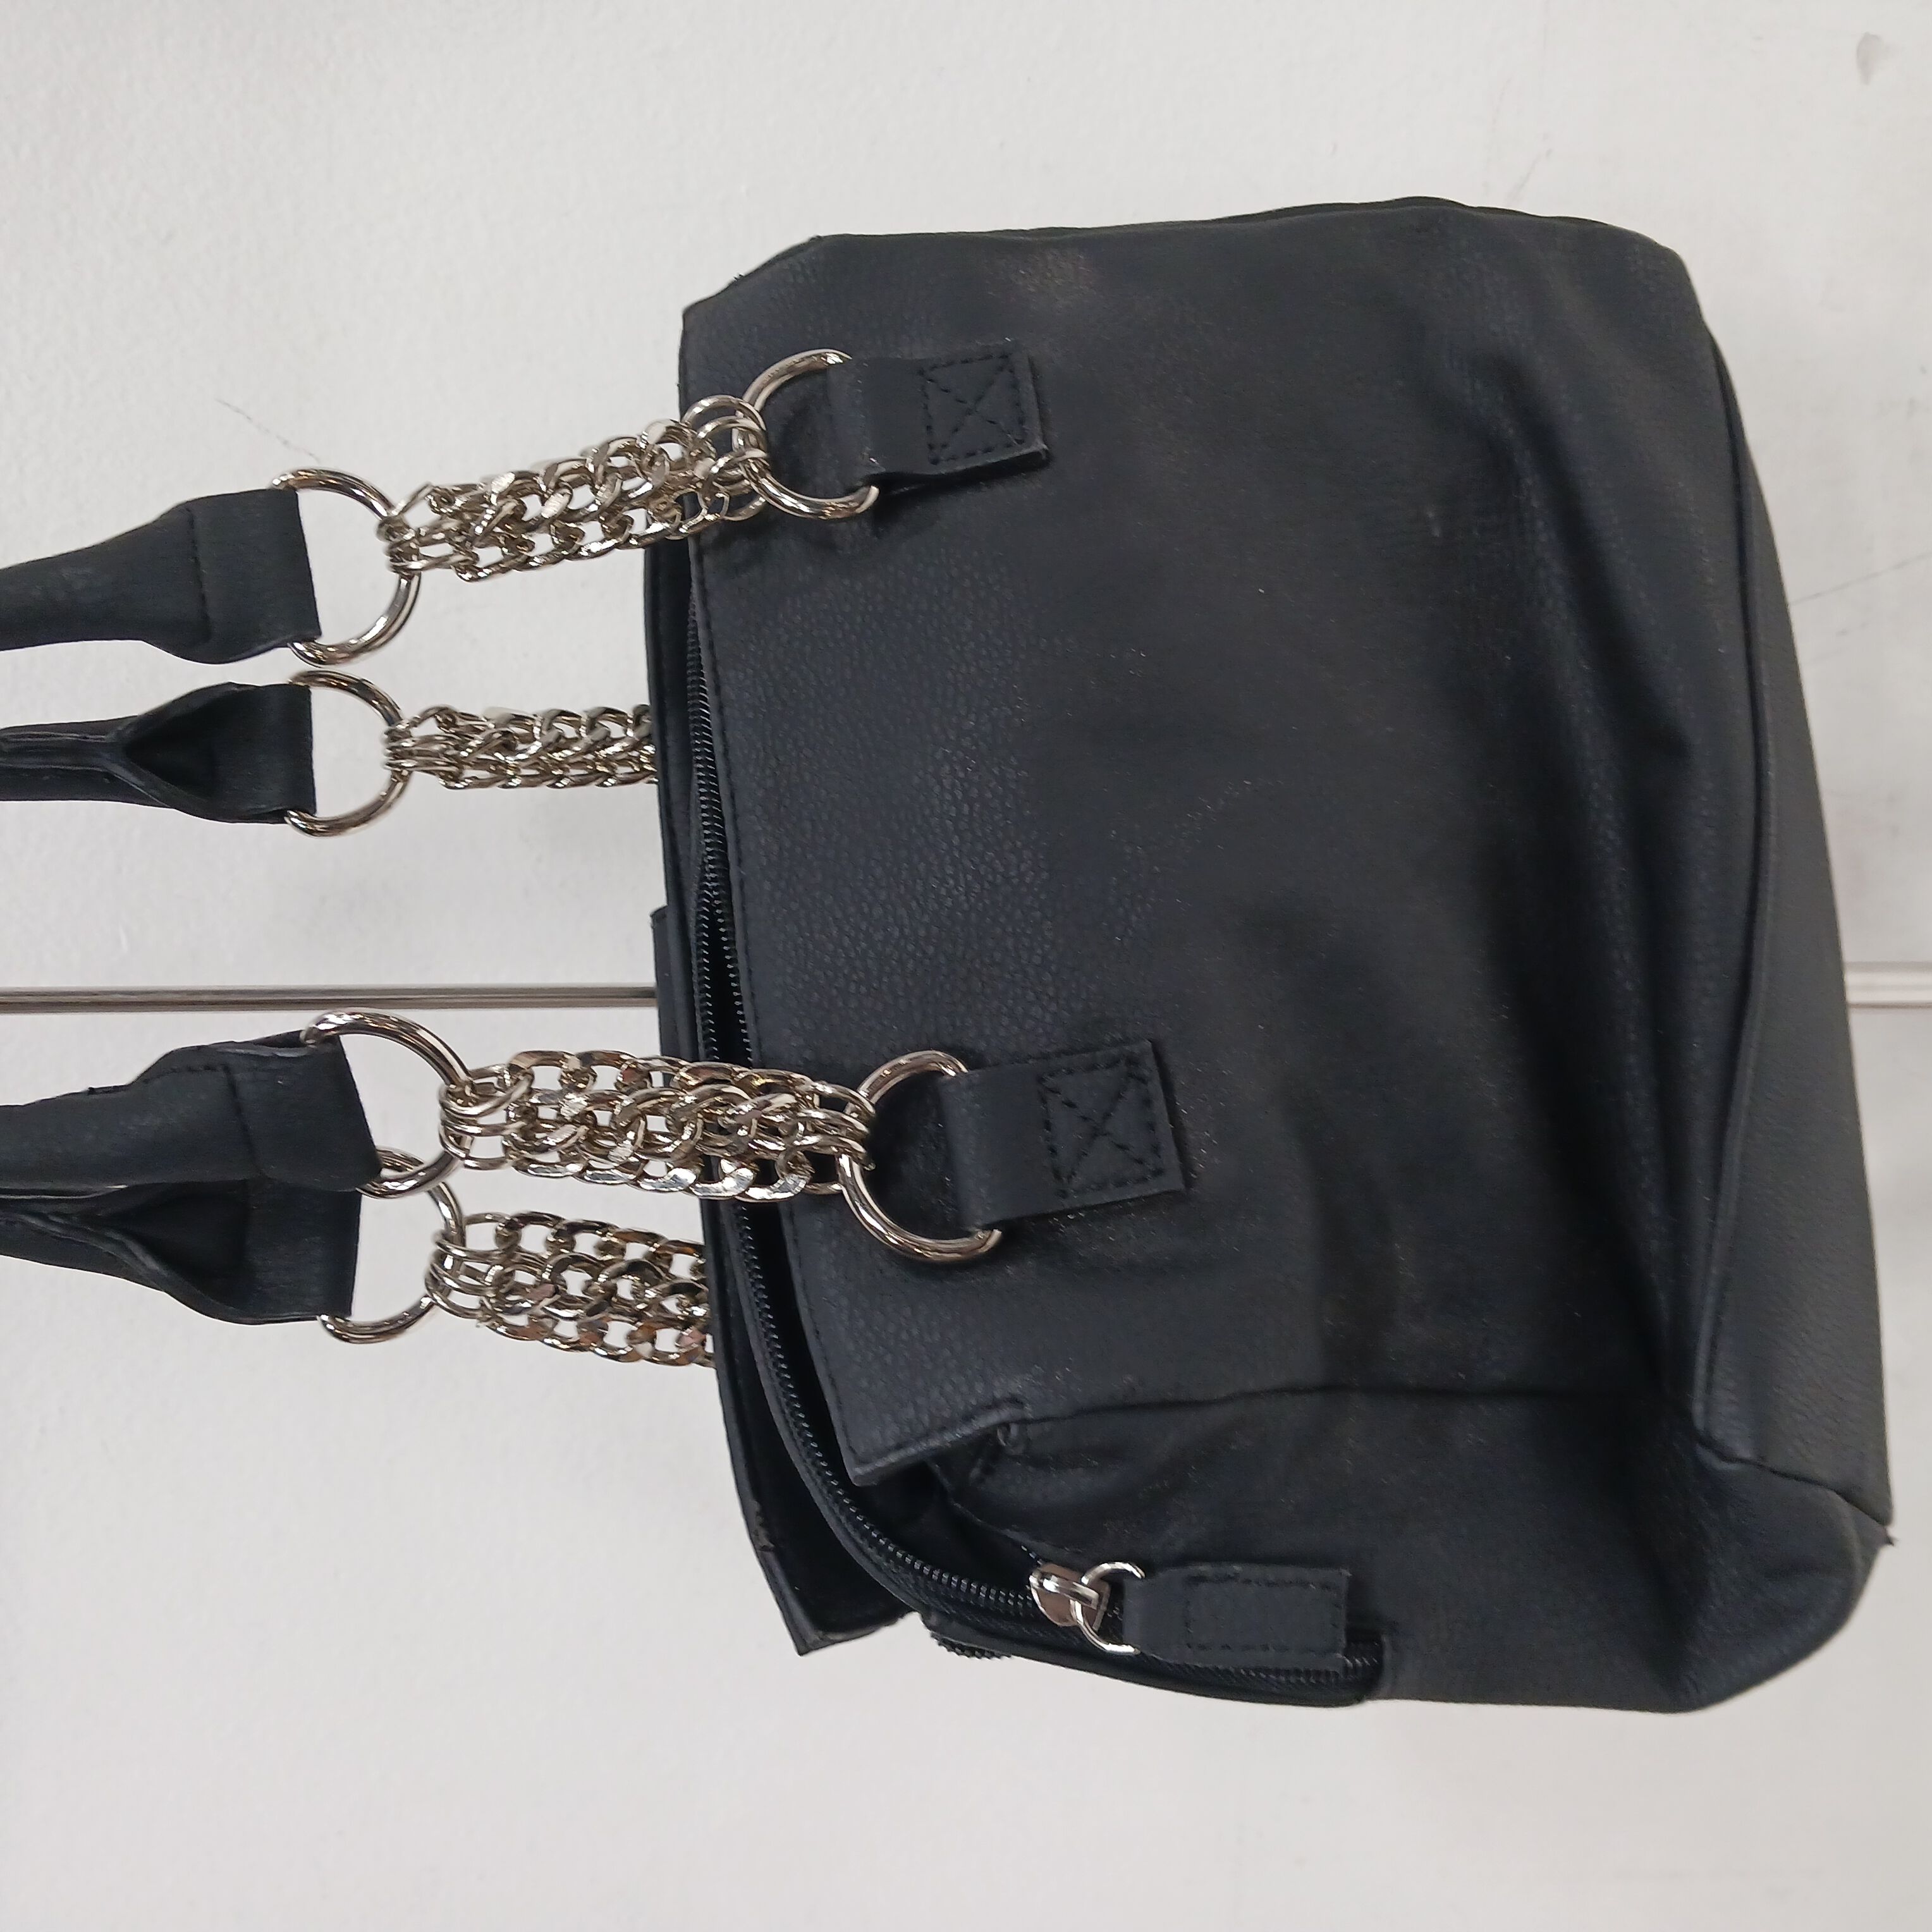 Rosetti Purse 3 Piece Shoulder Bag Compartments Cosmetic Eyeglass | eBay